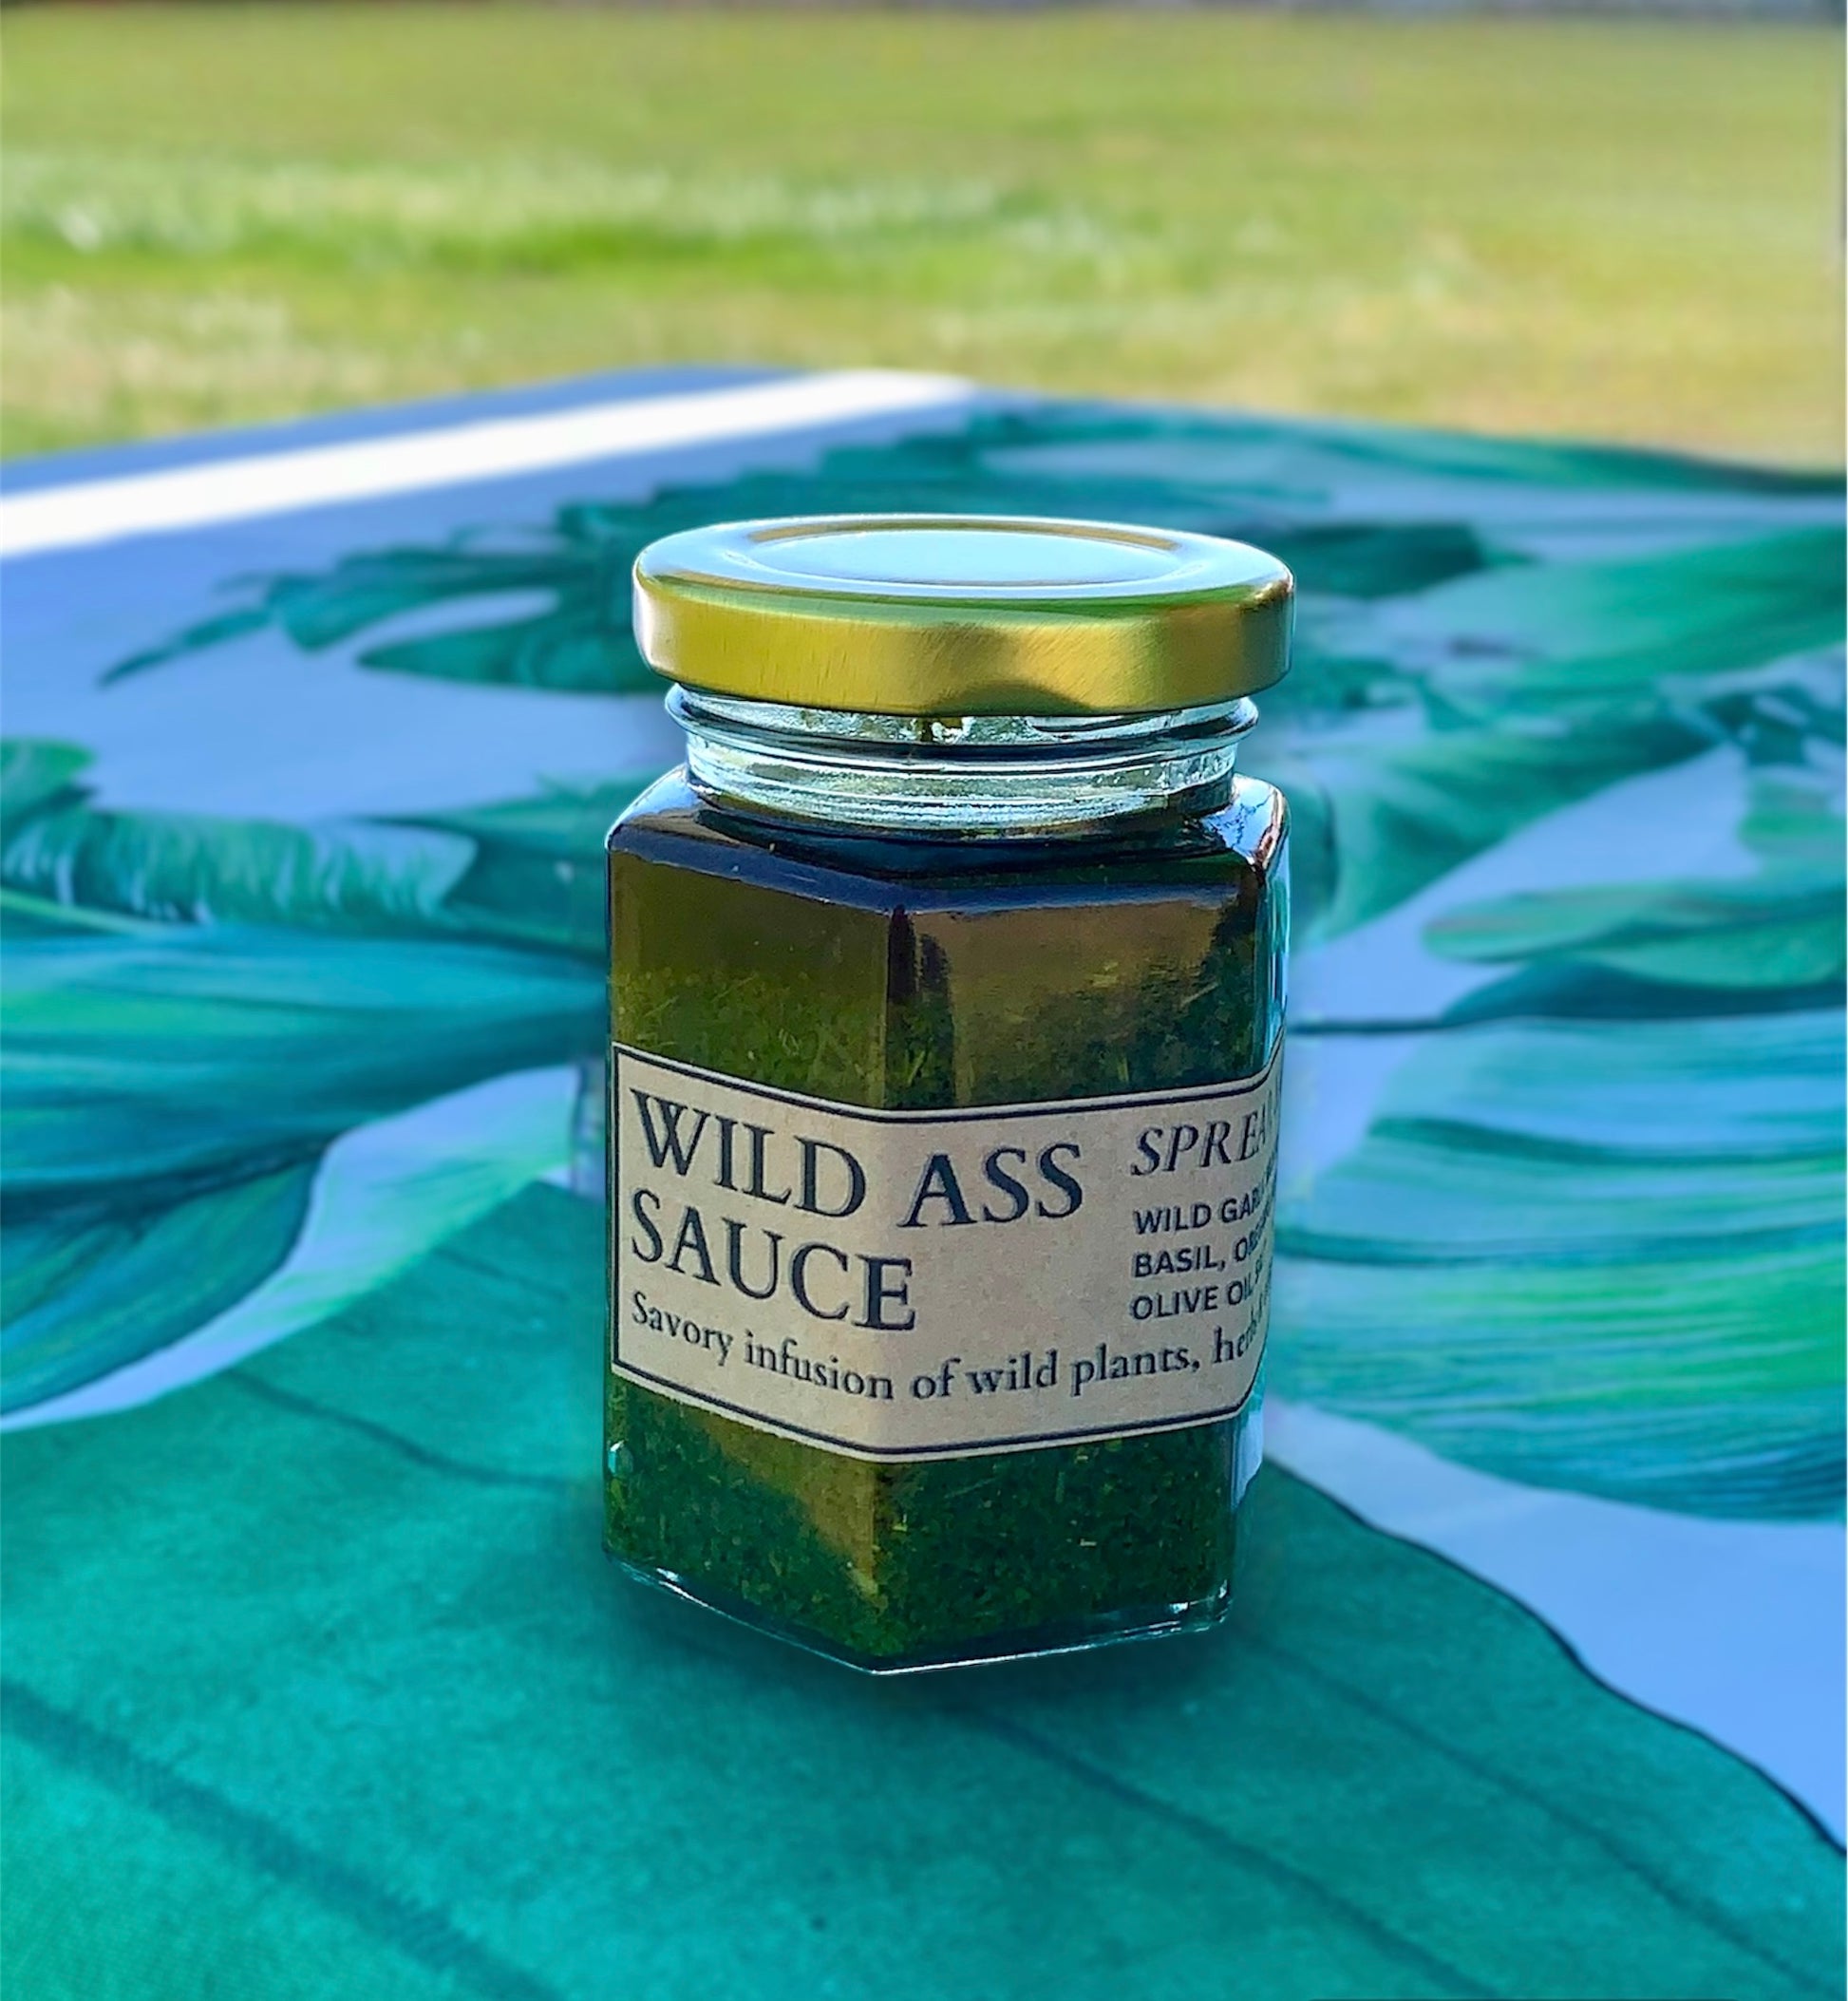 WILD ASS SAUCE BY GLAM GARDENER GARLIC MUSTARD WILD ONION ORGANIC PESTO Wild plant infused savory sauce